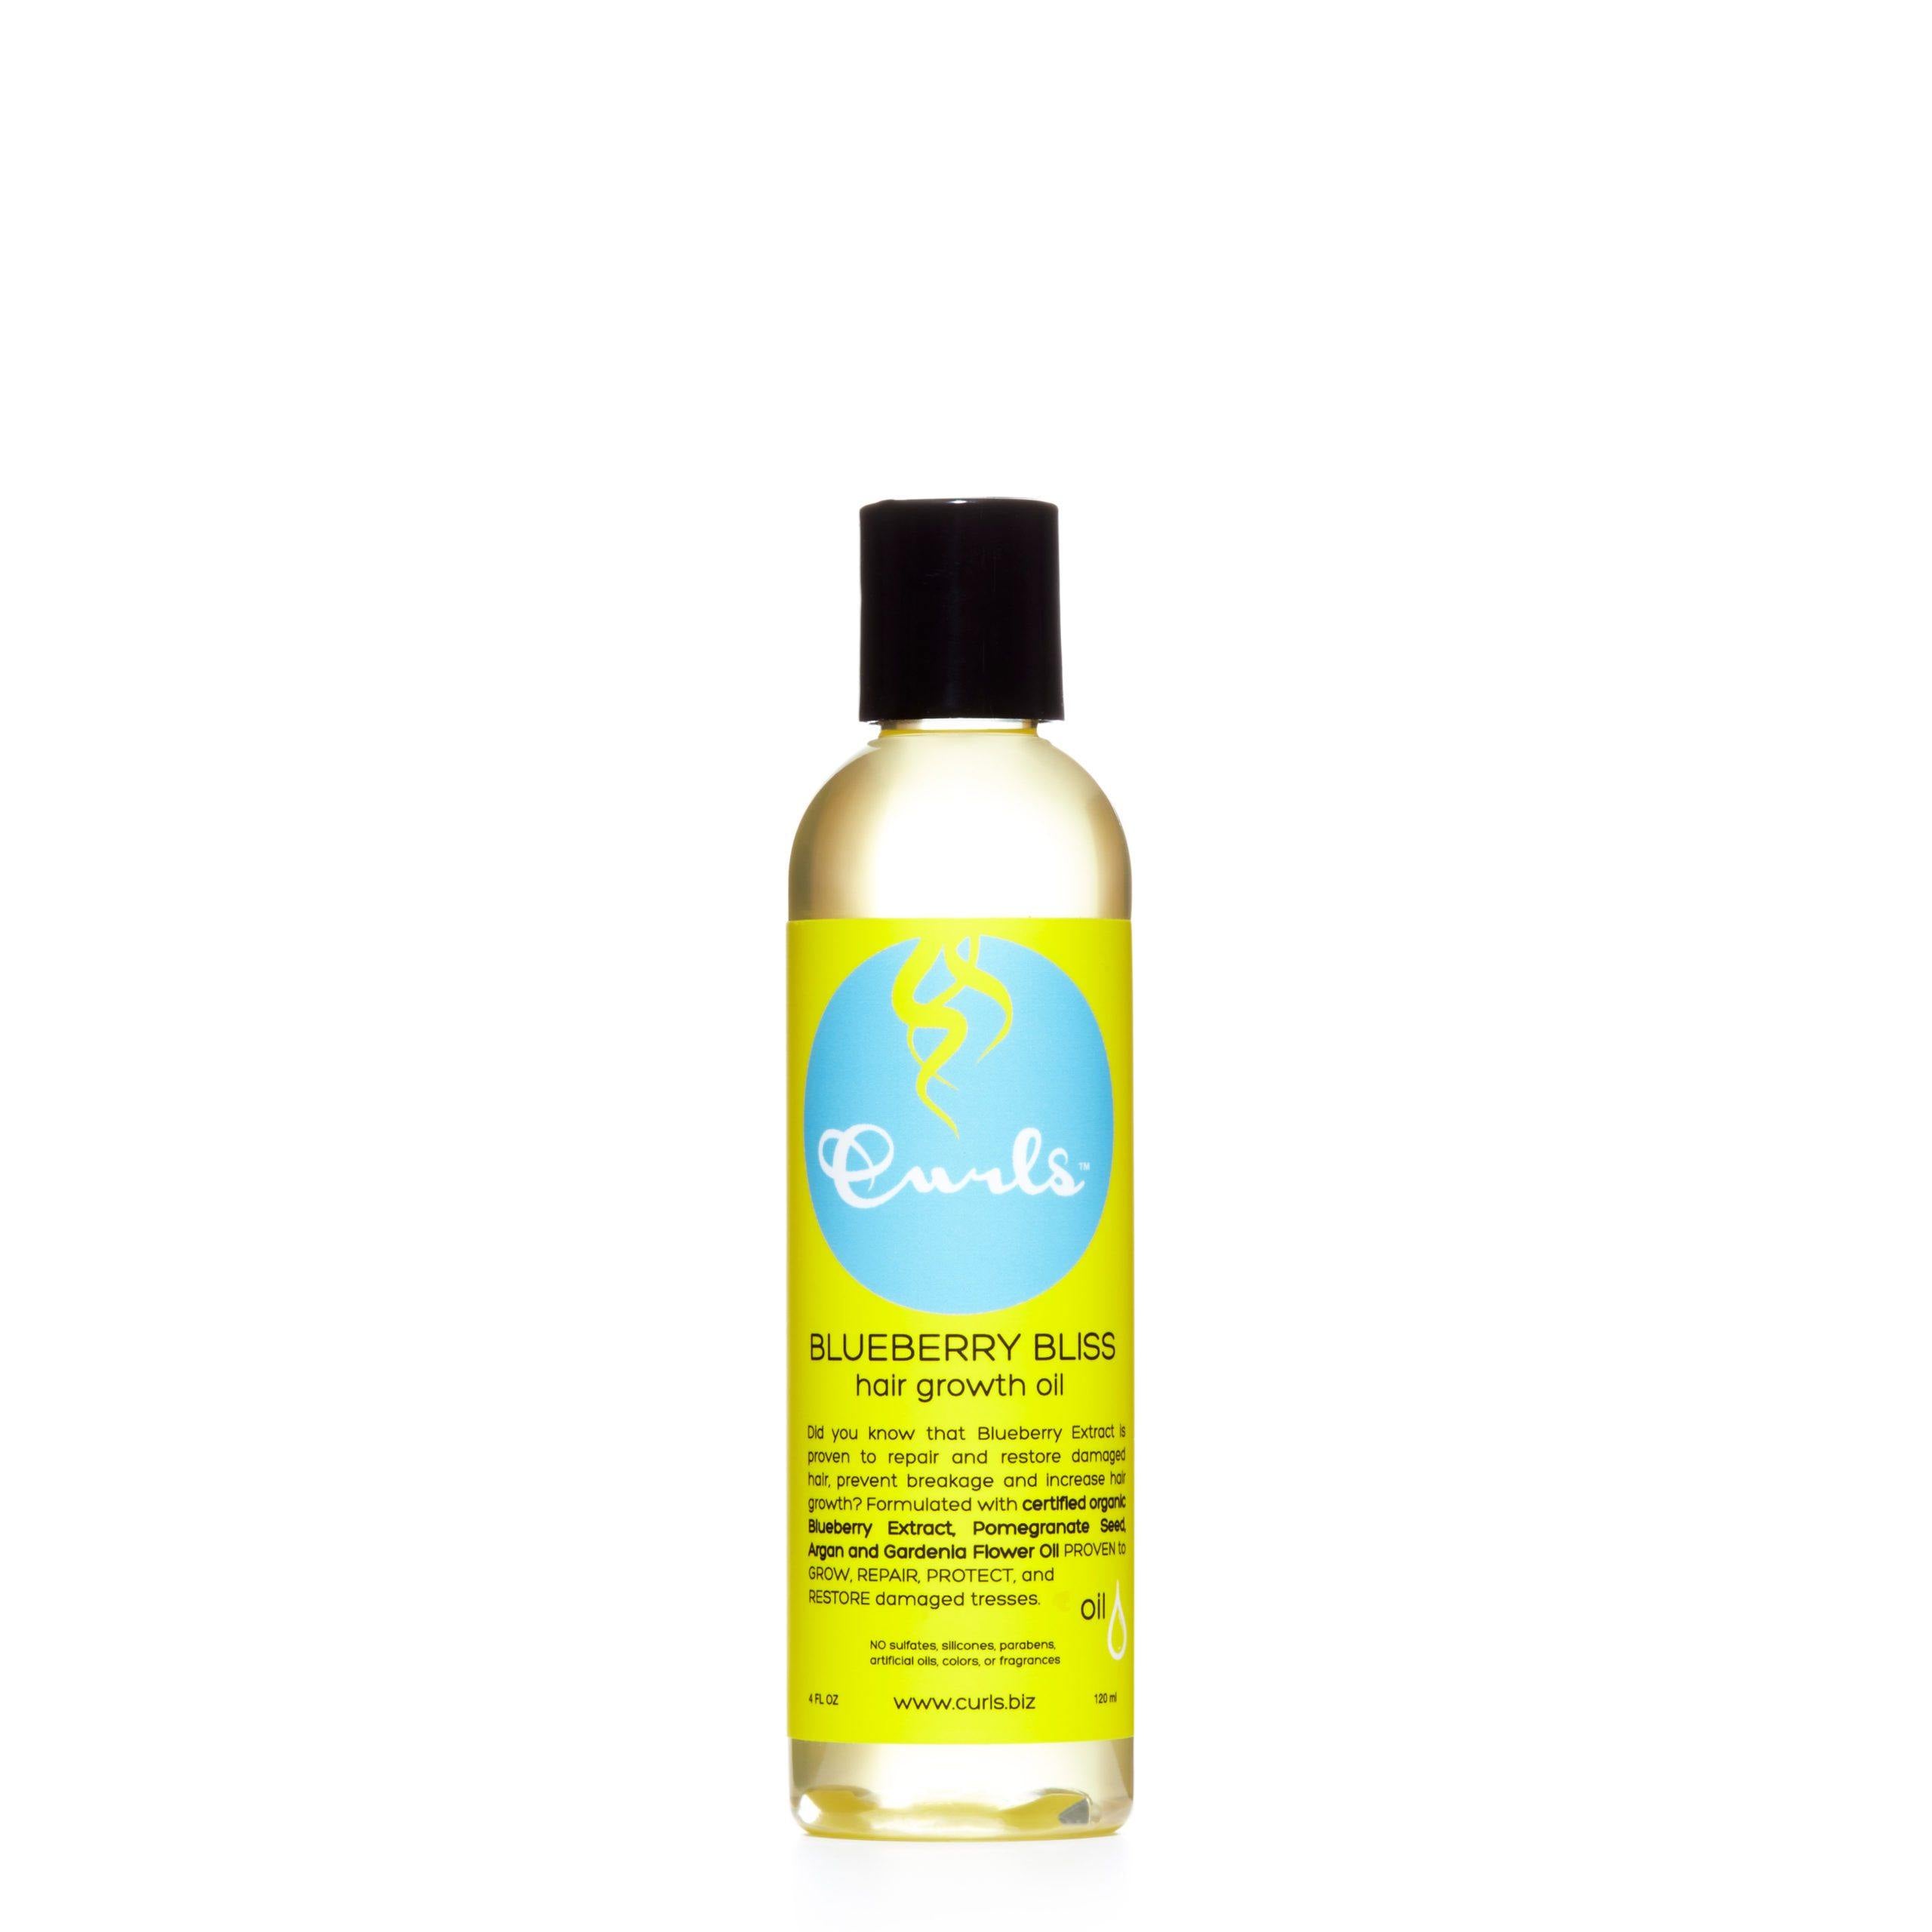 Curls Blueberry Bliss Hair Growth Oil - 4 fl oz - Beauty & Organic Co.